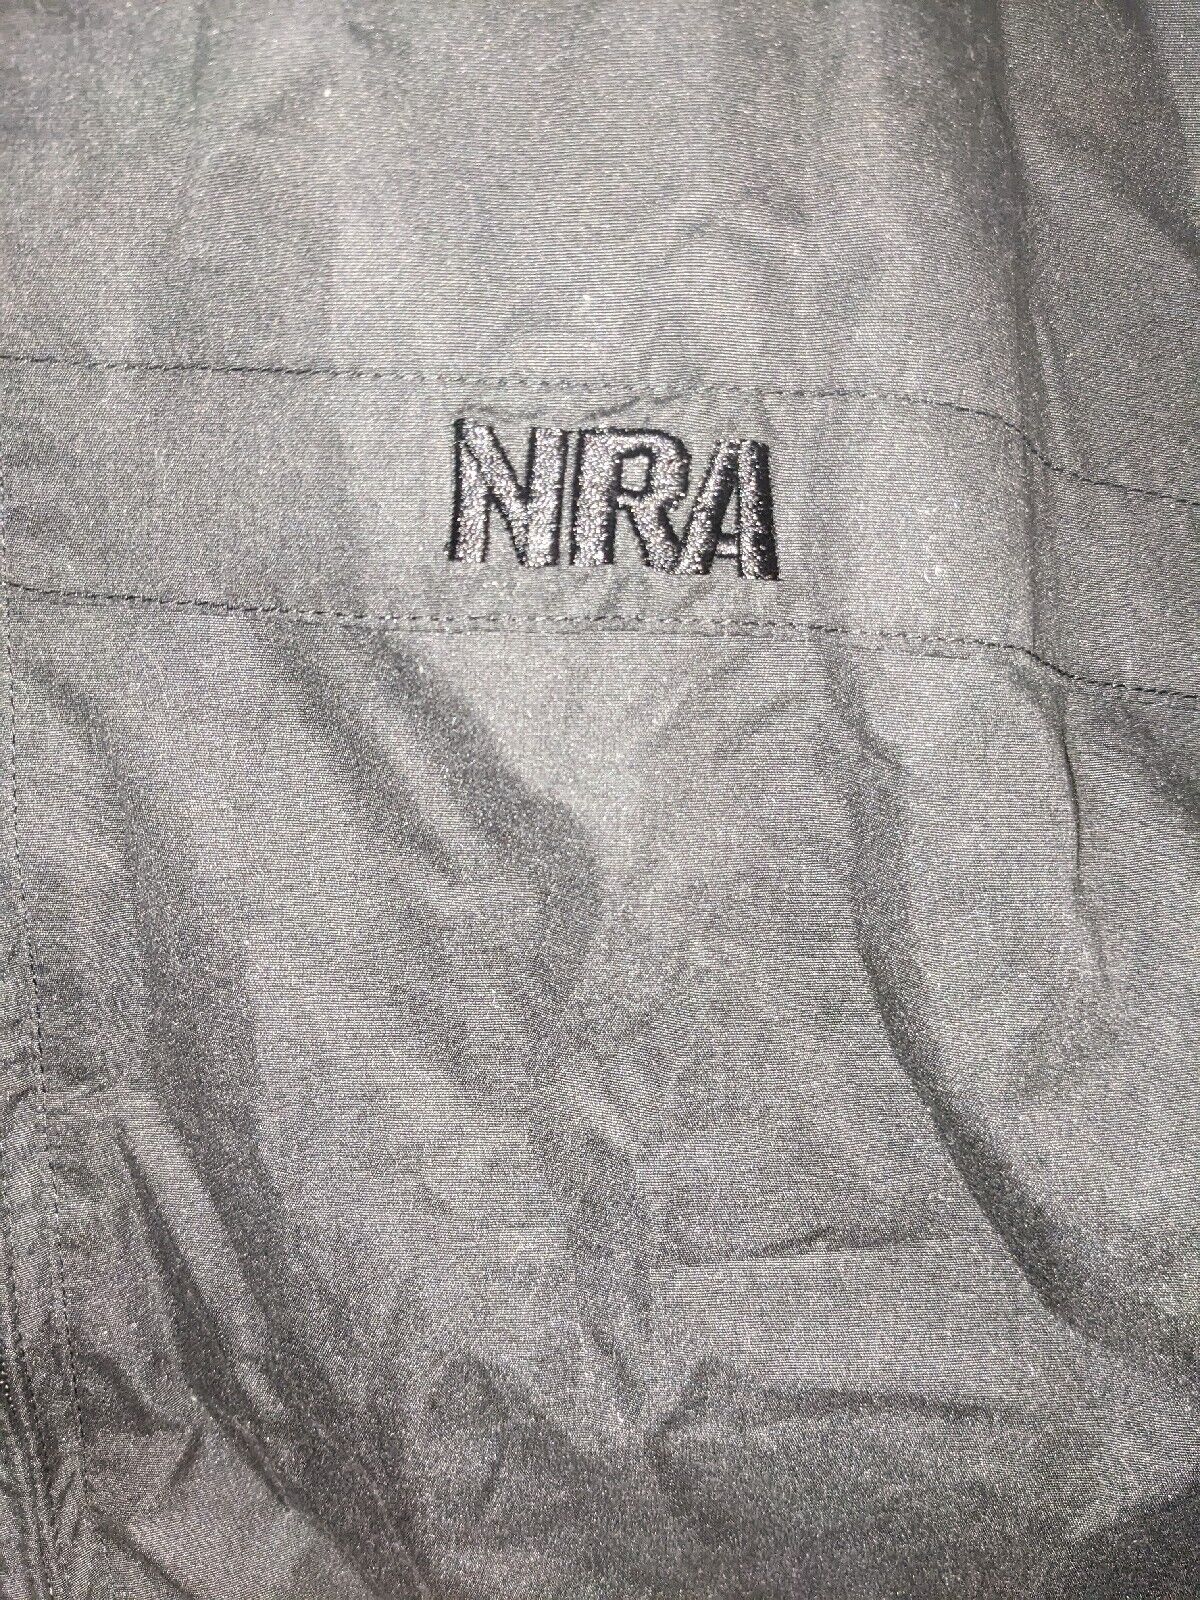 NRA Tactical Jacket Black Concealed Carry Zip Windbre… - Gem